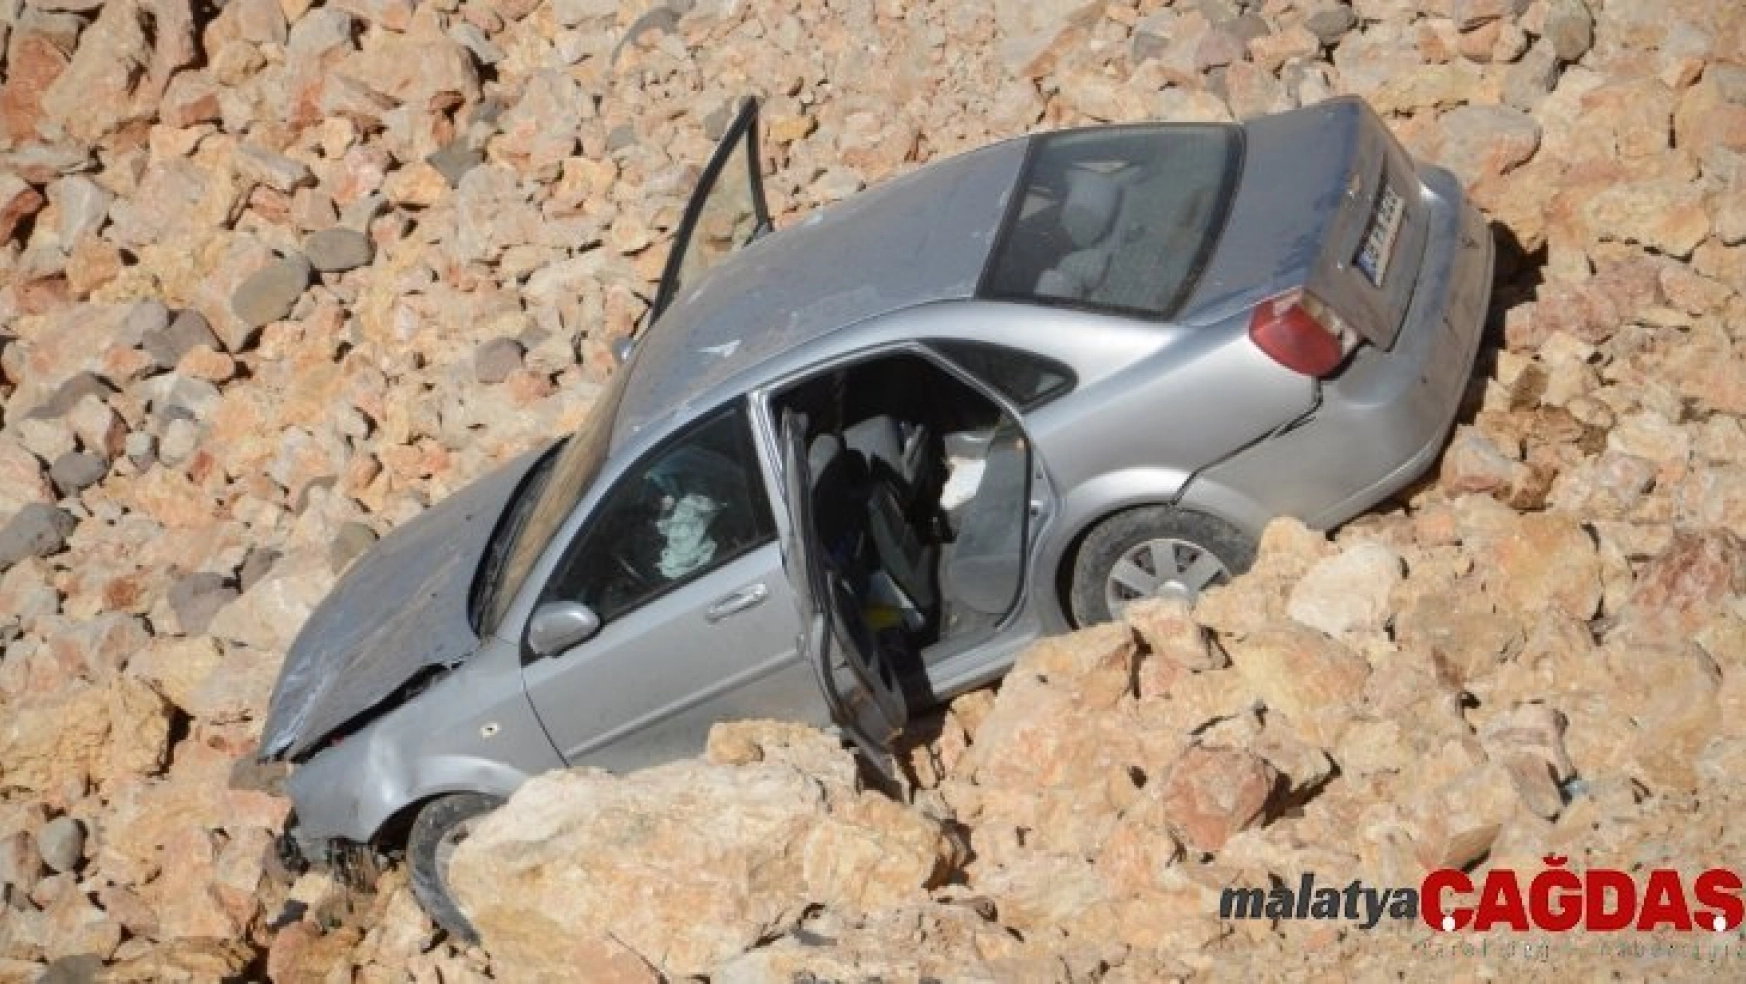 Malatya-Kayseri yolunda kaza: 5 yaralı